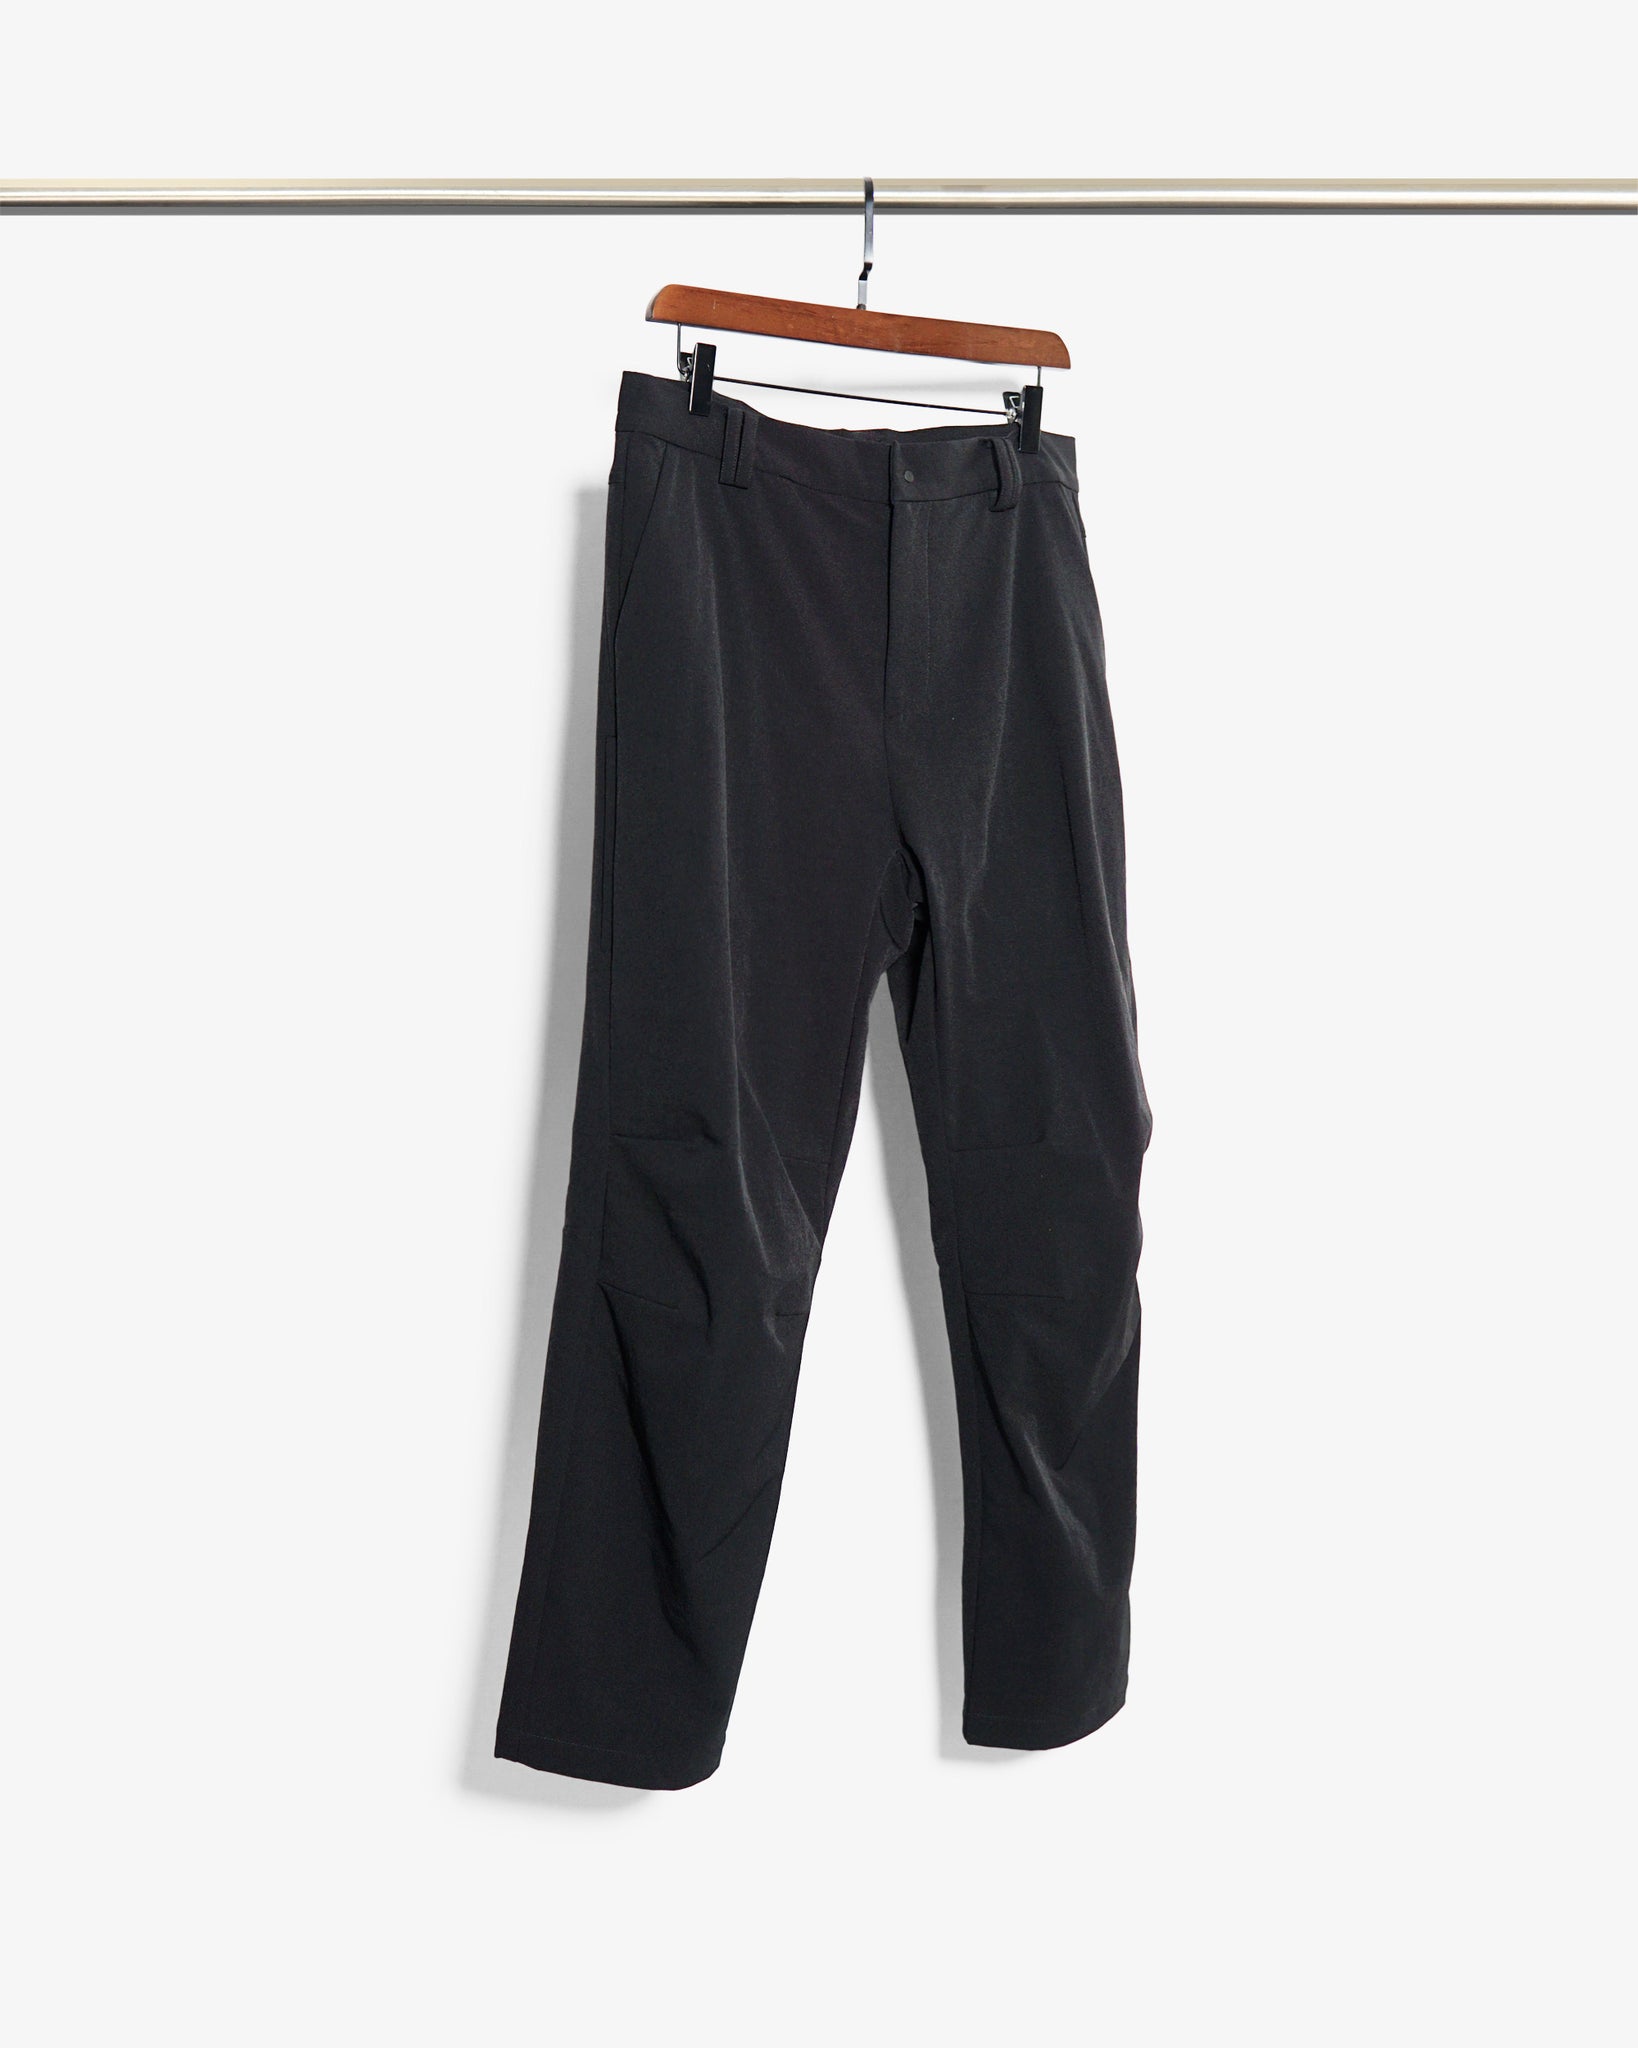 ROSEN-X Hiten Articulated Trousers in 2L Nylon Sz 2-3